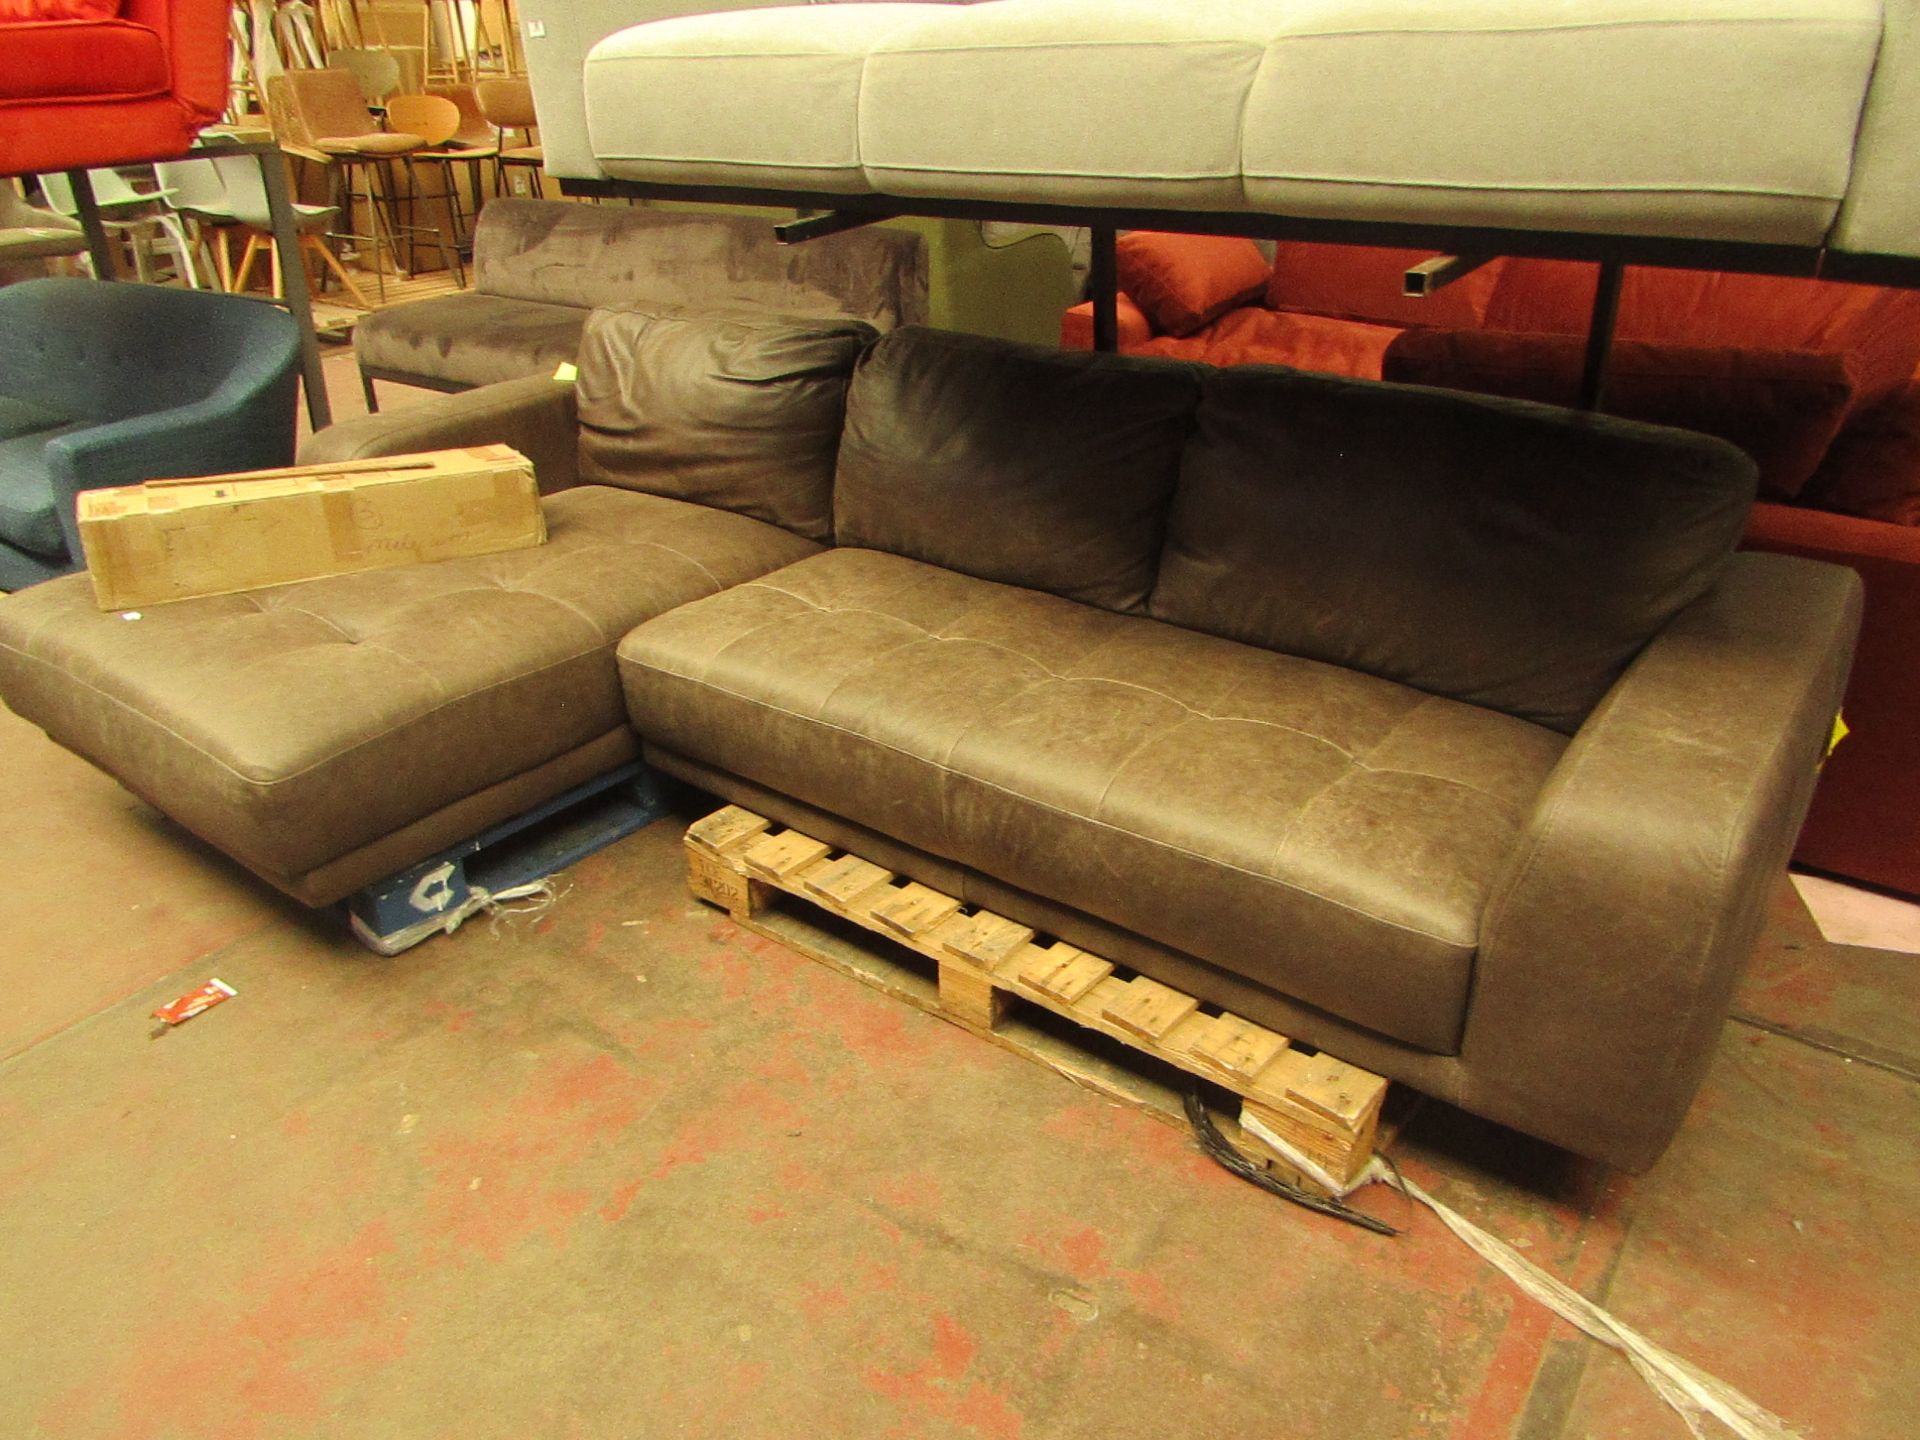 1 x Made.com Luciano Left Hand Facing Corner Sofa Texas Charcoal Grey Leather RRP £1699 SKU MAD-